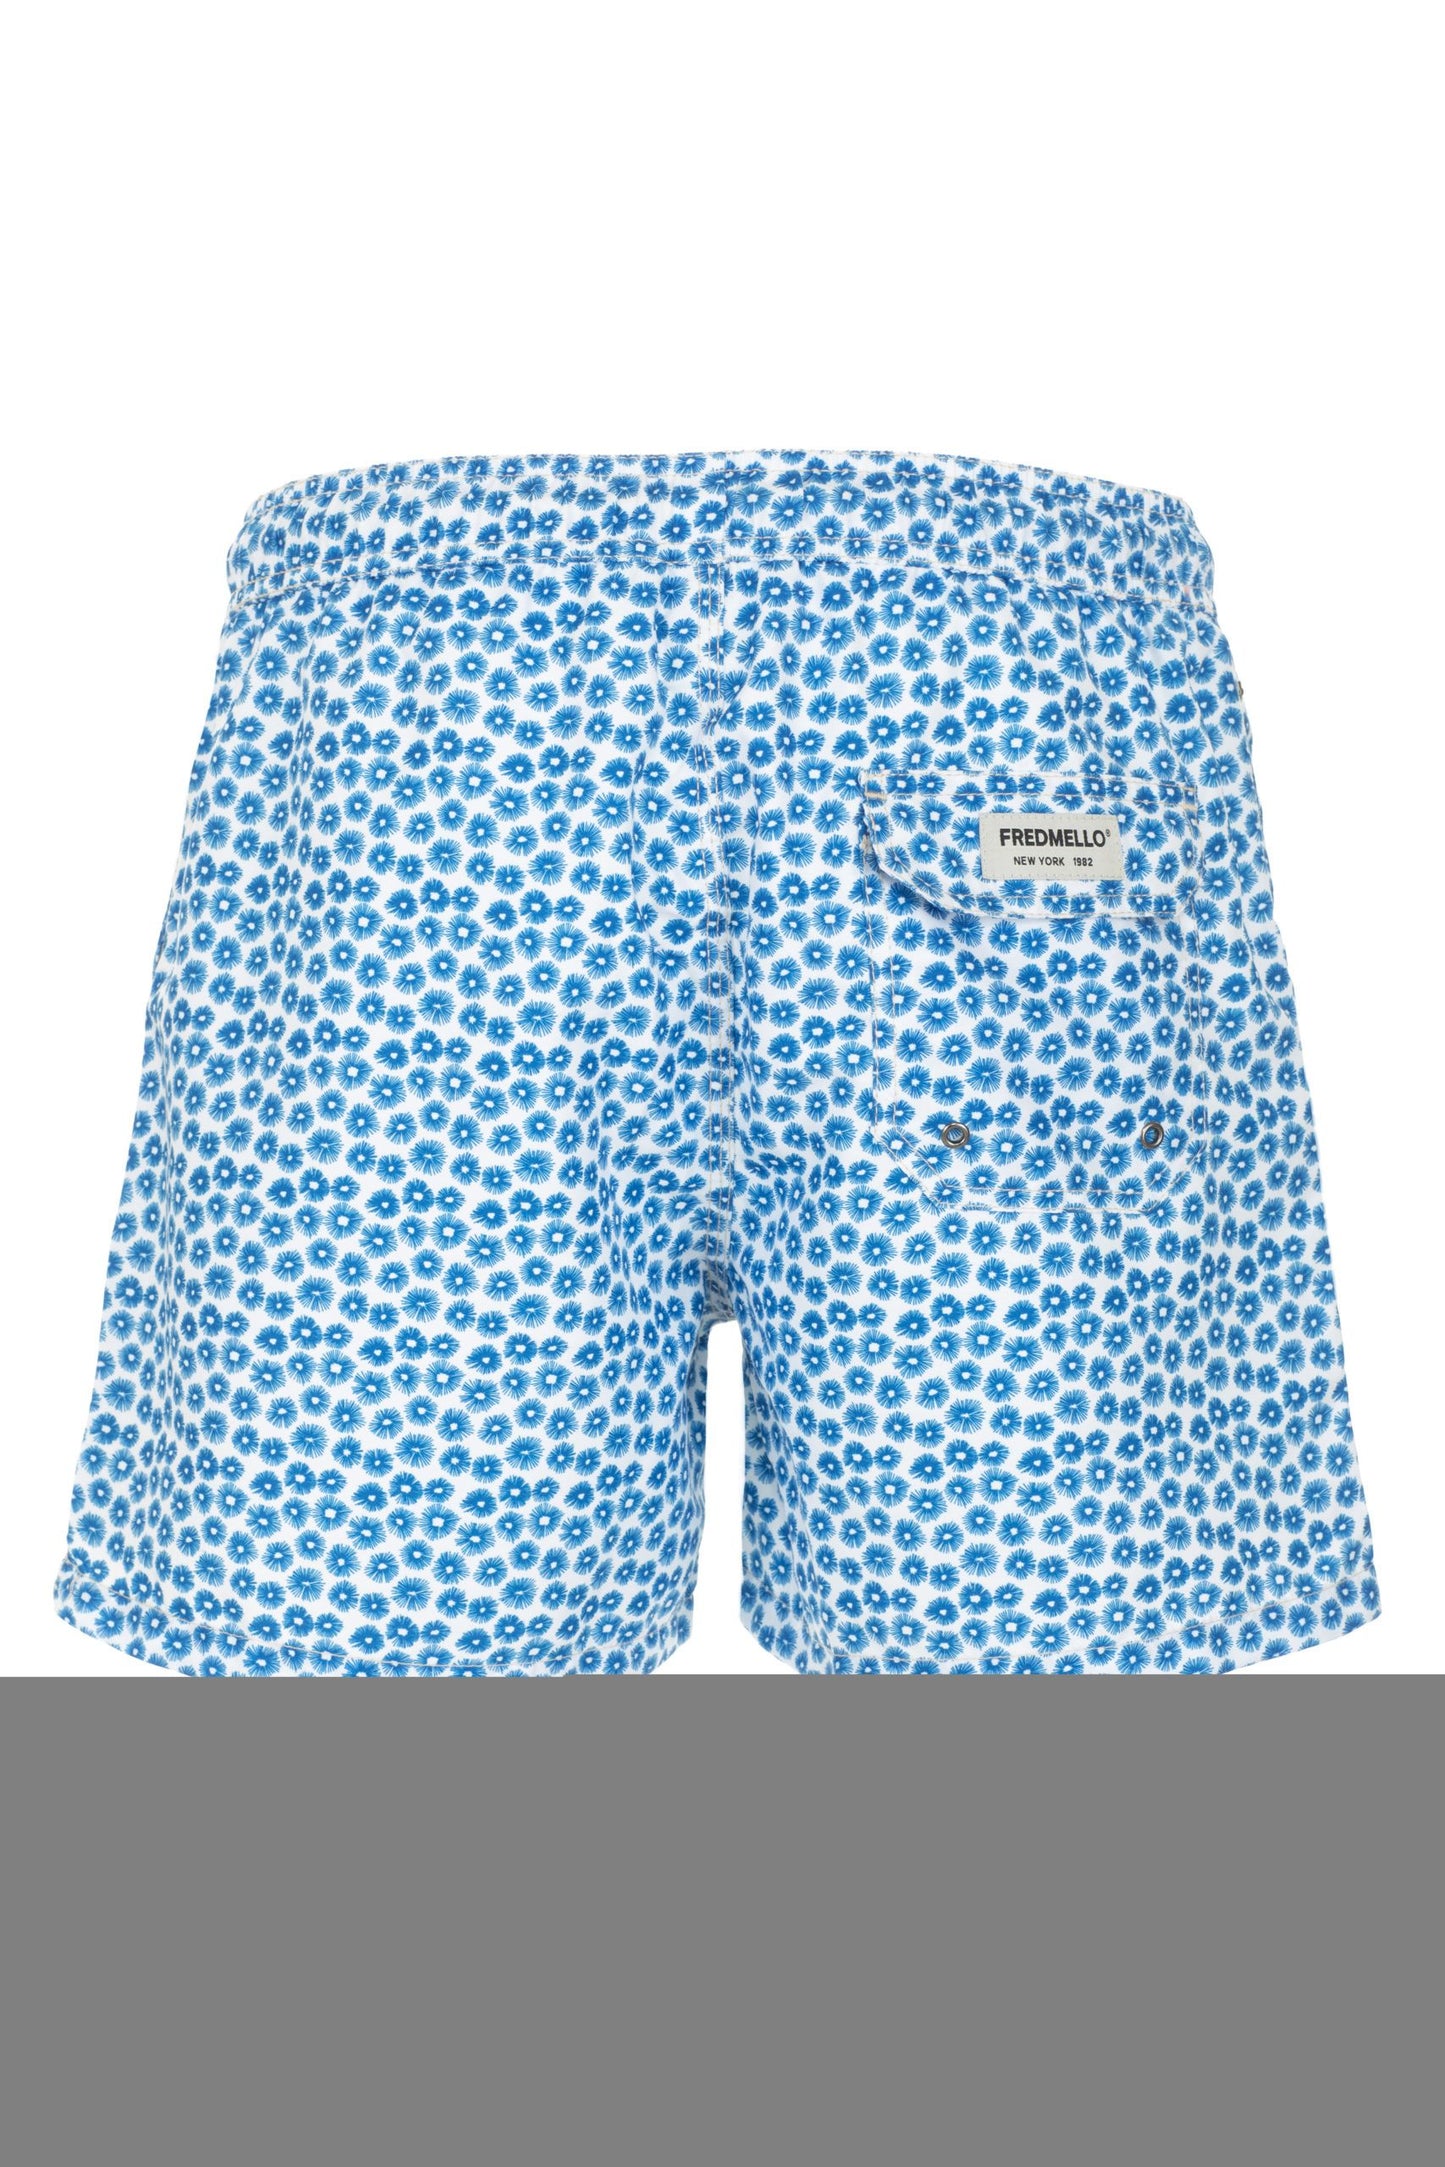 Chic Light Blue Beach Shorts for Men